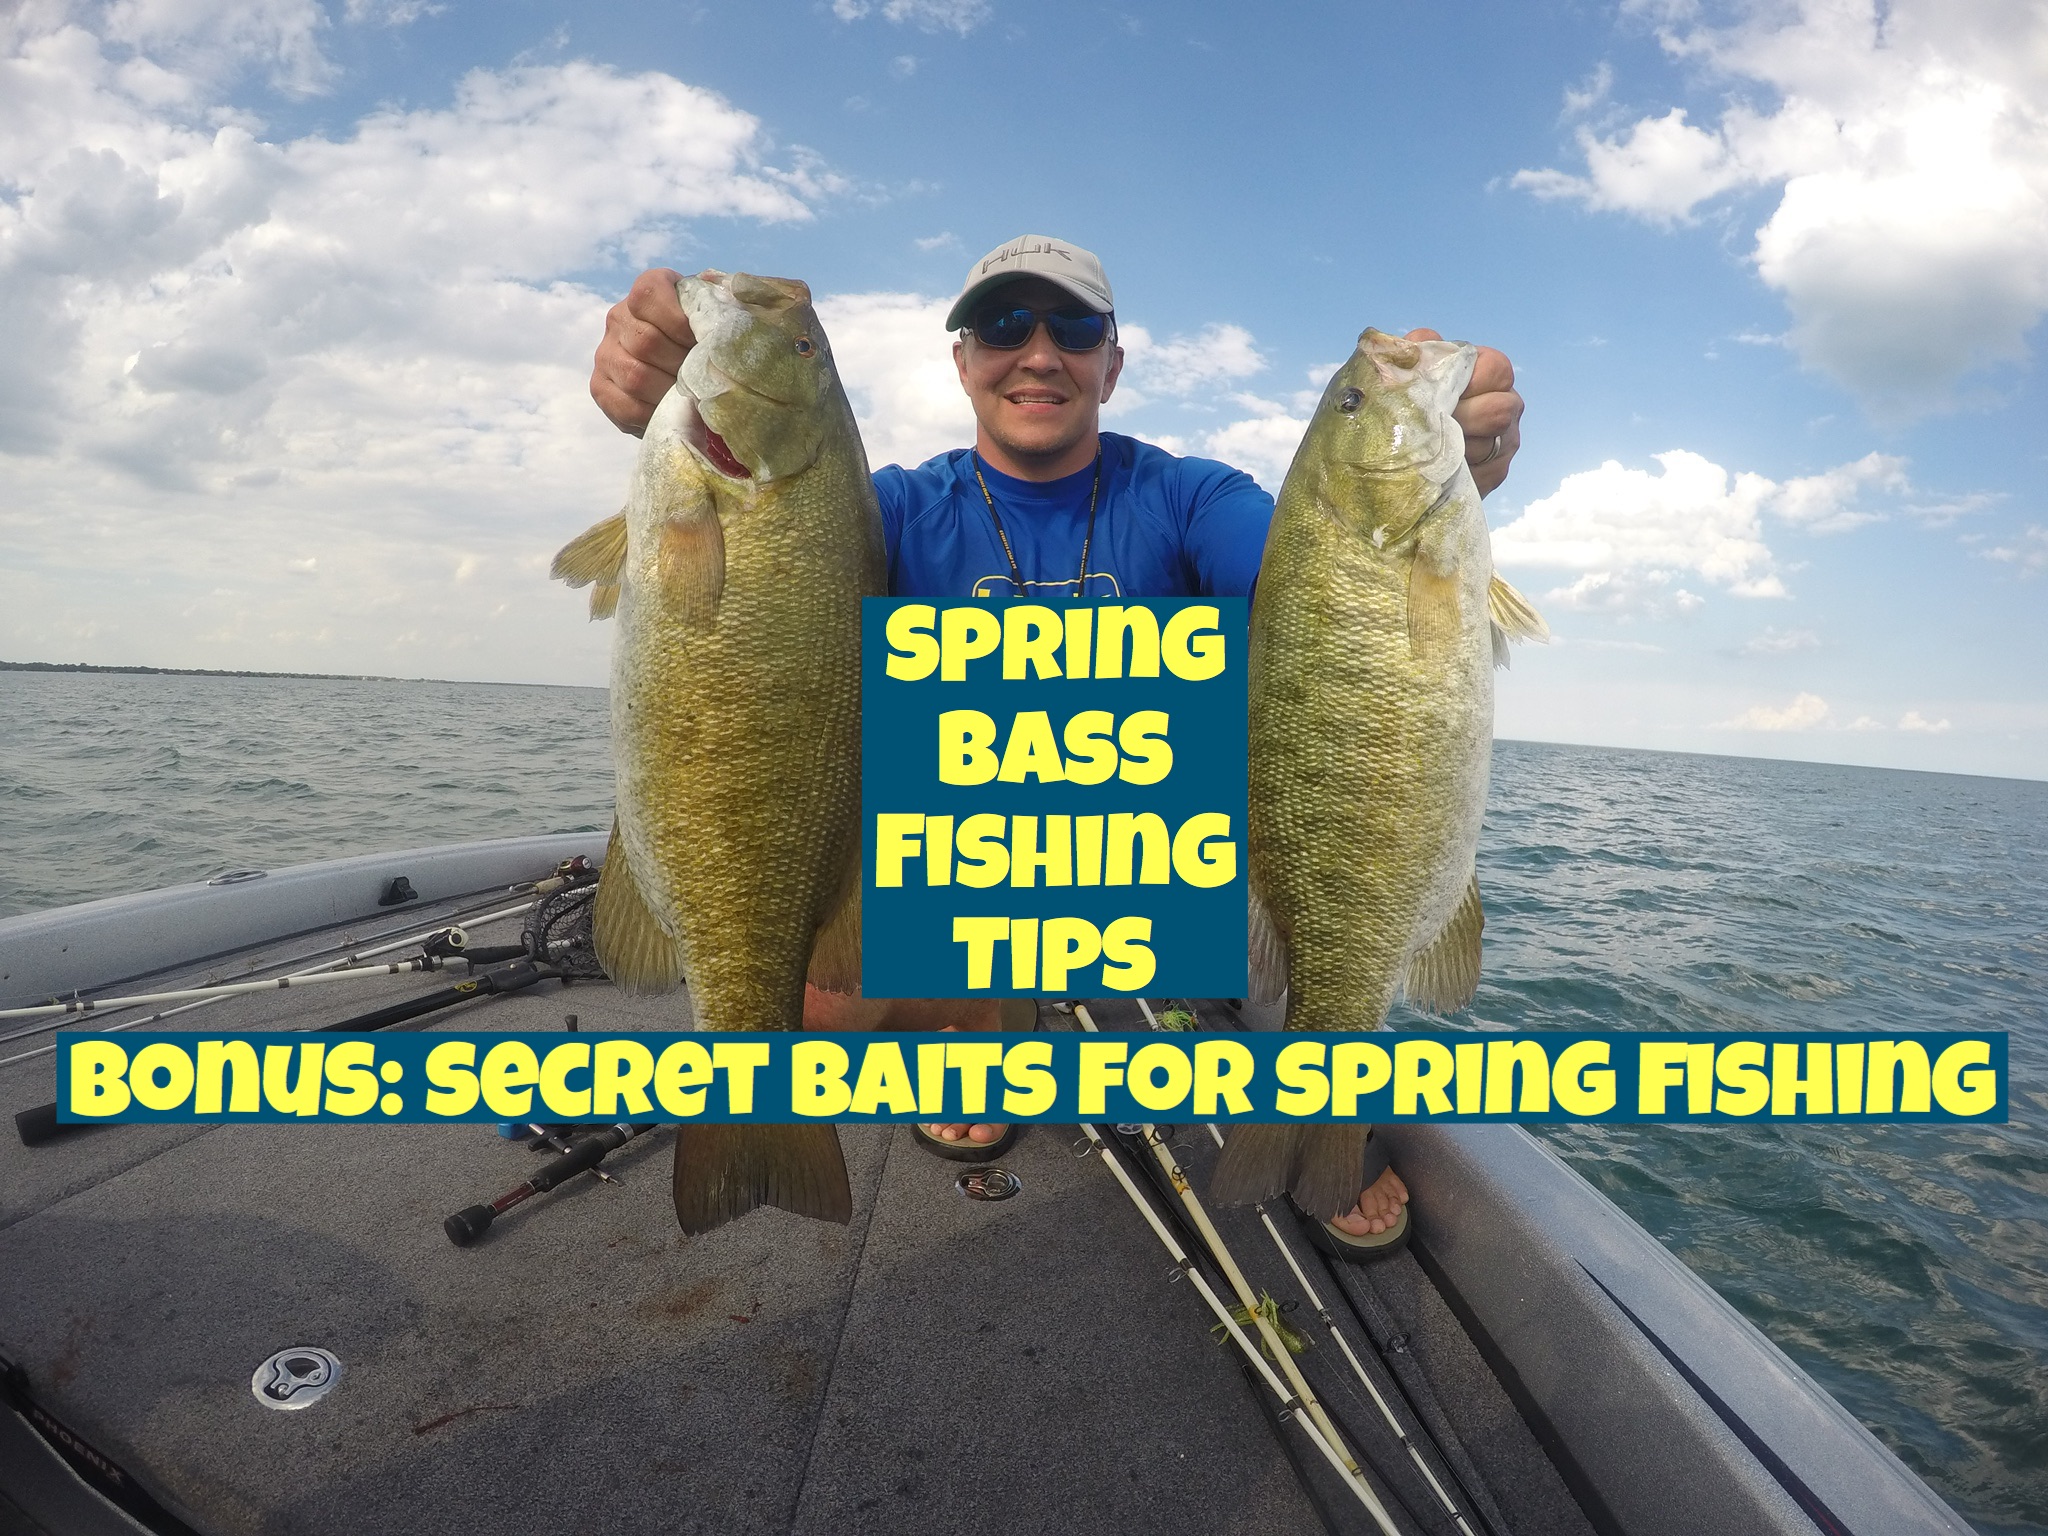 https://hookdonbassin.com/wp-content/uploads/2020/04/Spring-Bass-Fishing-Tips.jpg